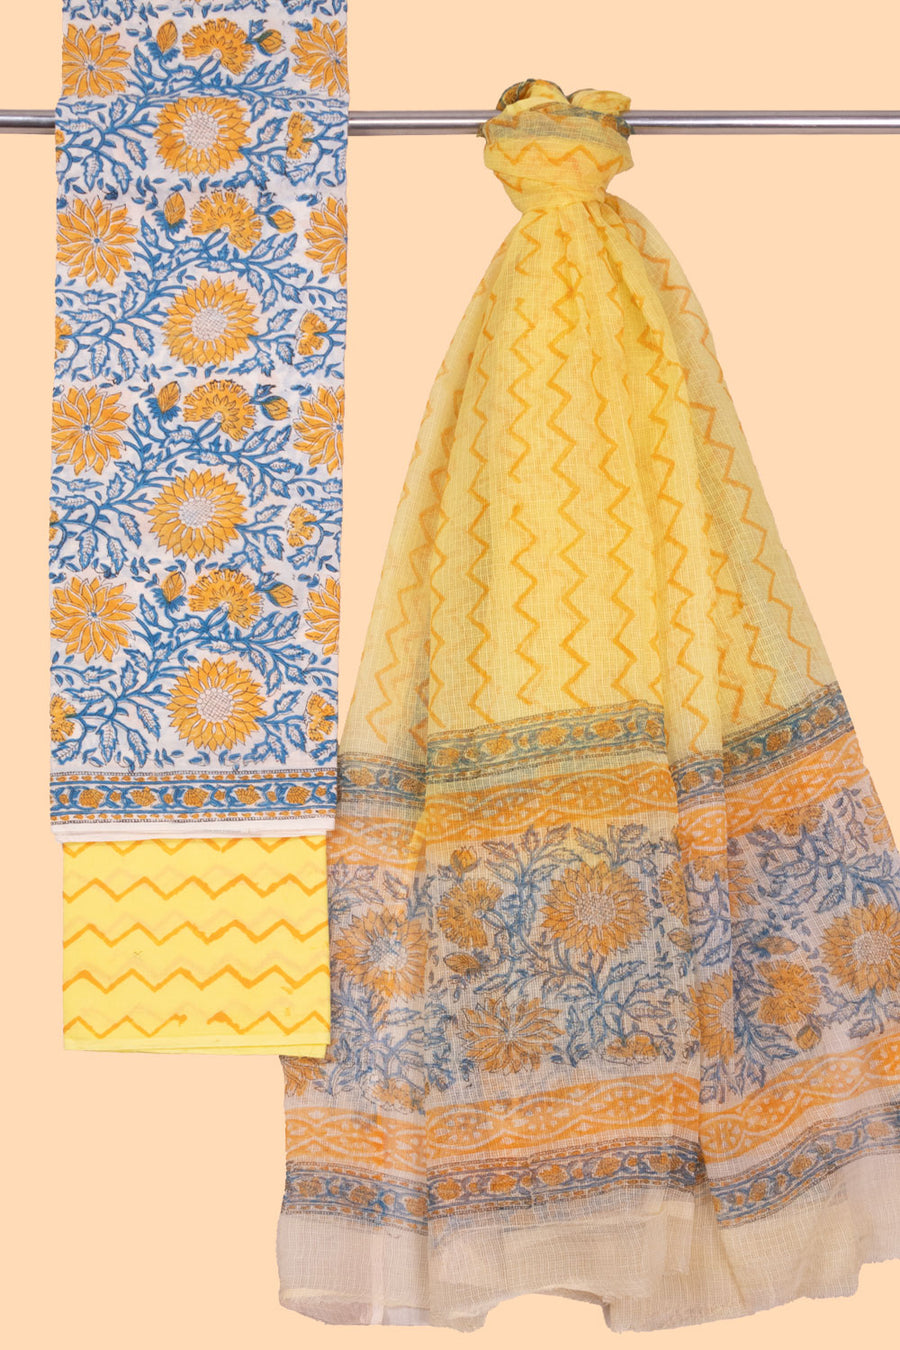 Off-White 3-Piece Mulmul Cotton Salwar Suit Material With Kota Dupatta- 10070112